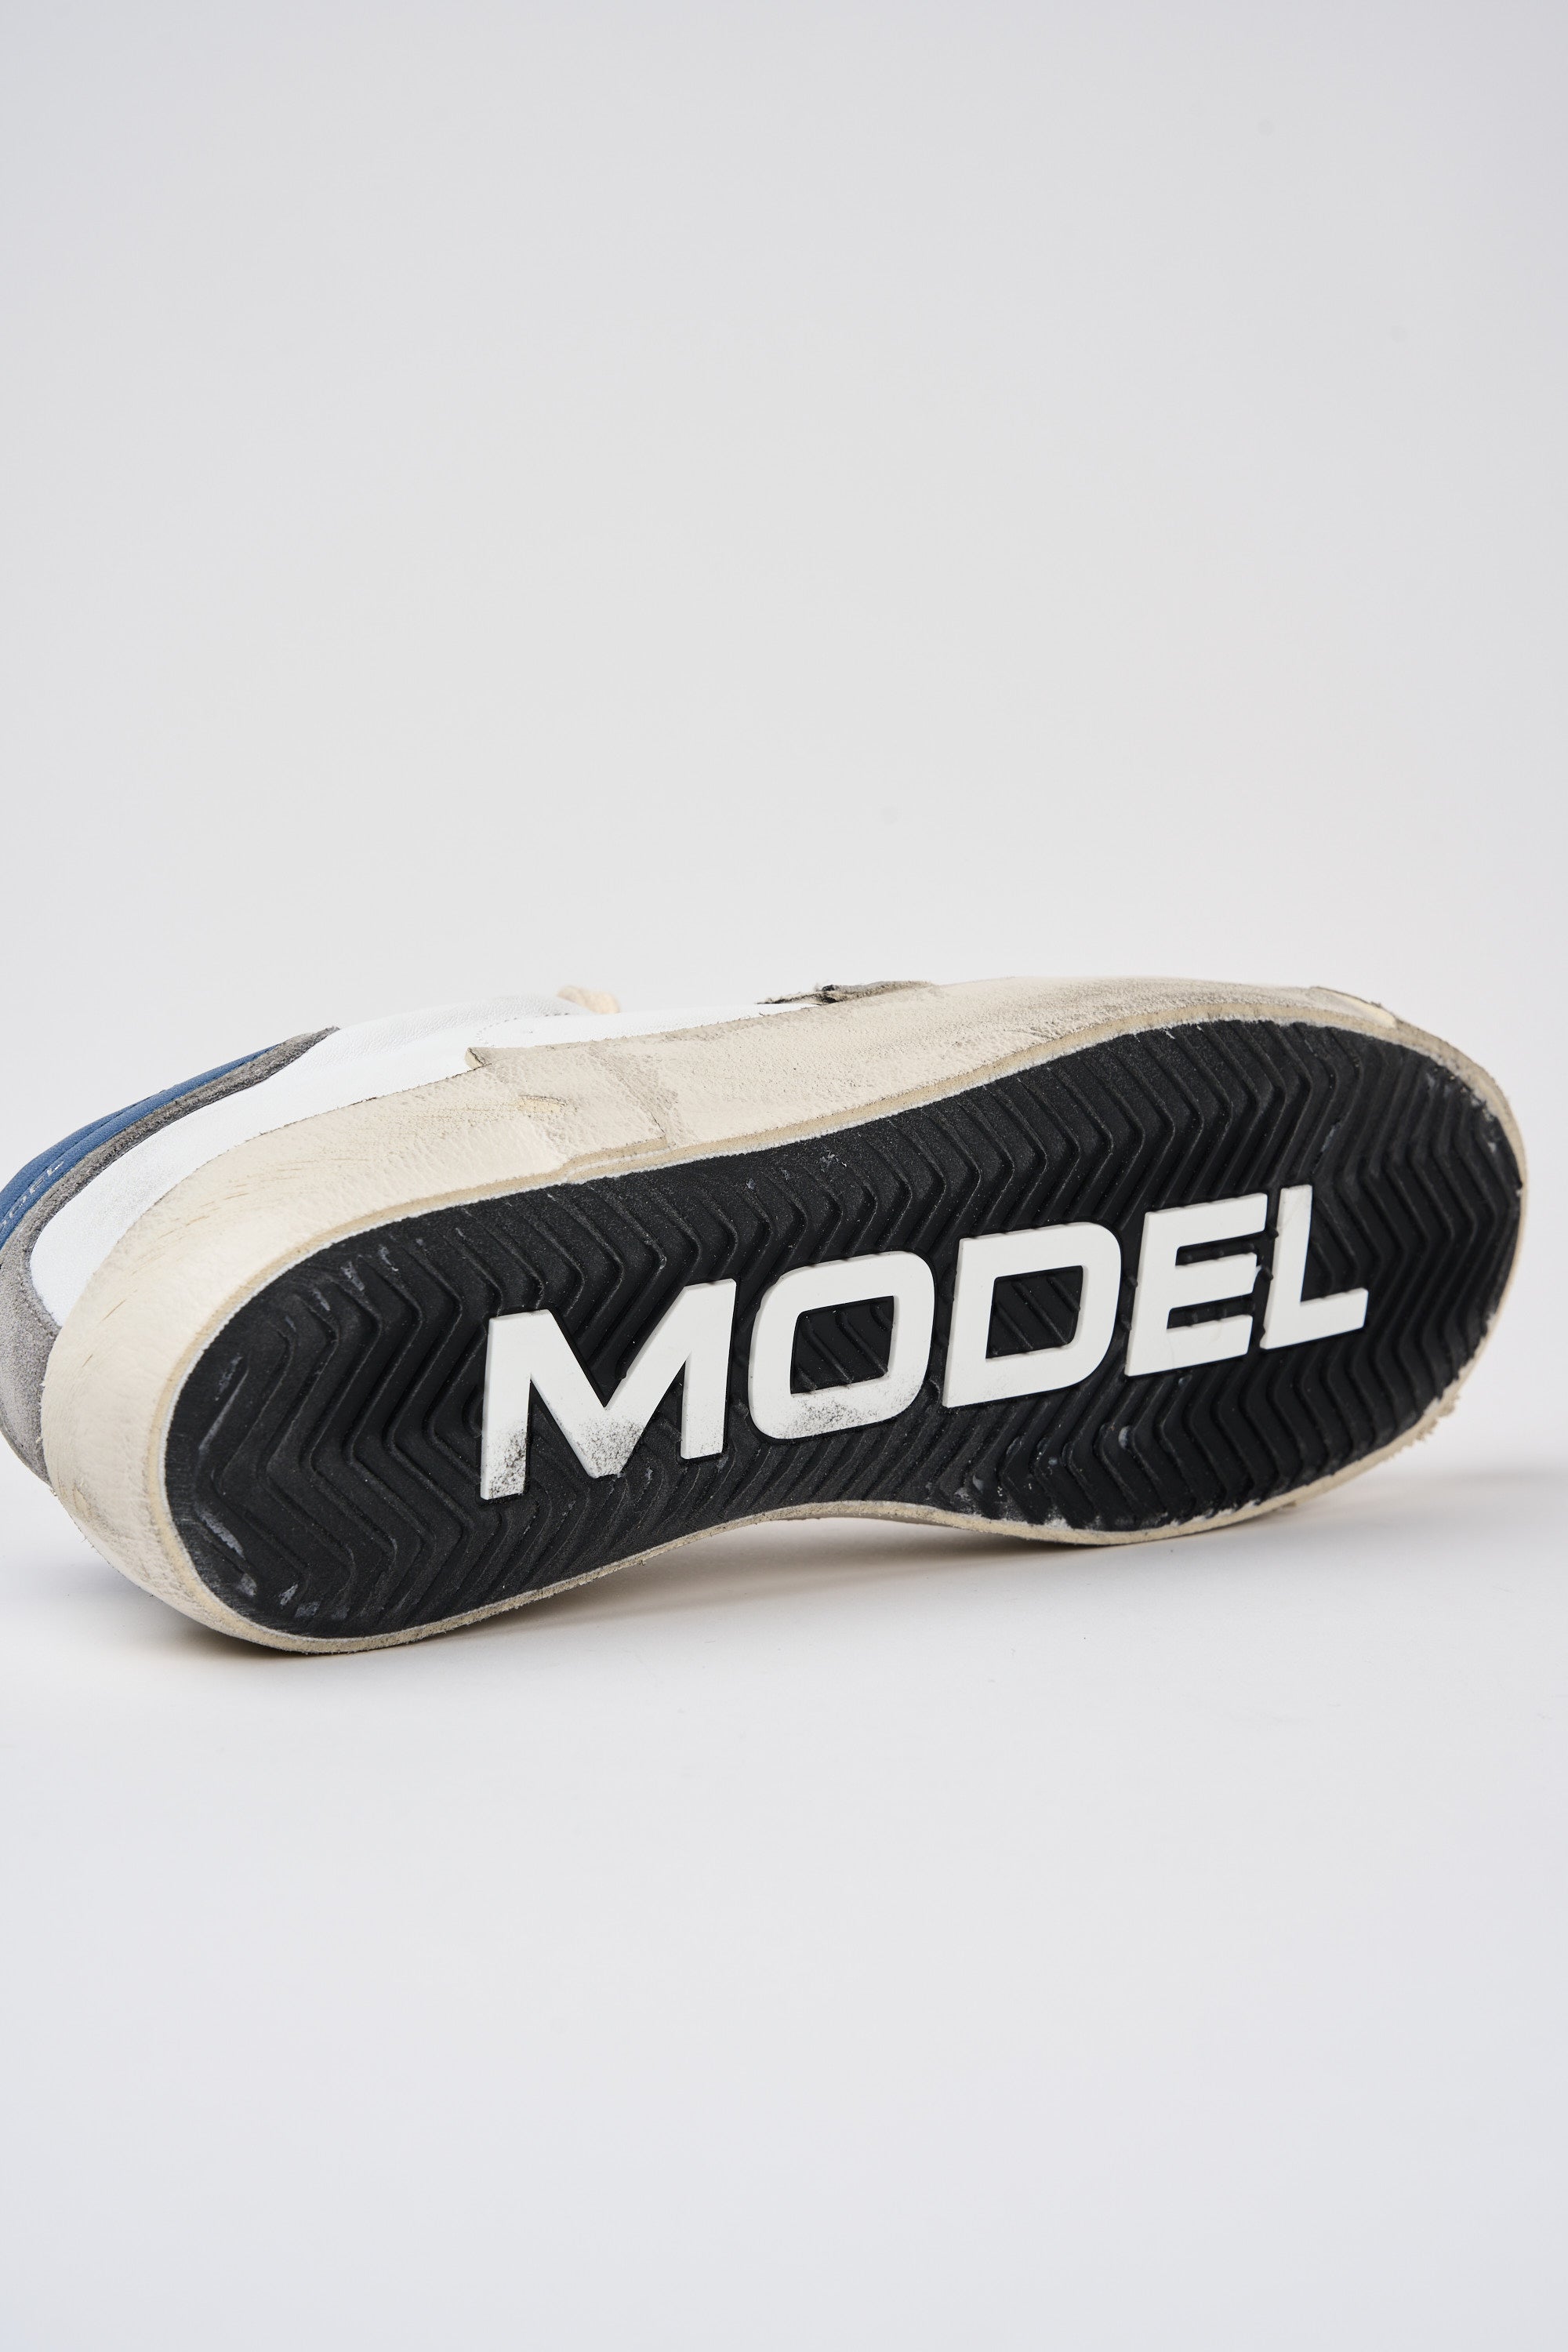 Philippe Model Sneaker Prsx Leder/Suede Weiß/Blau-5